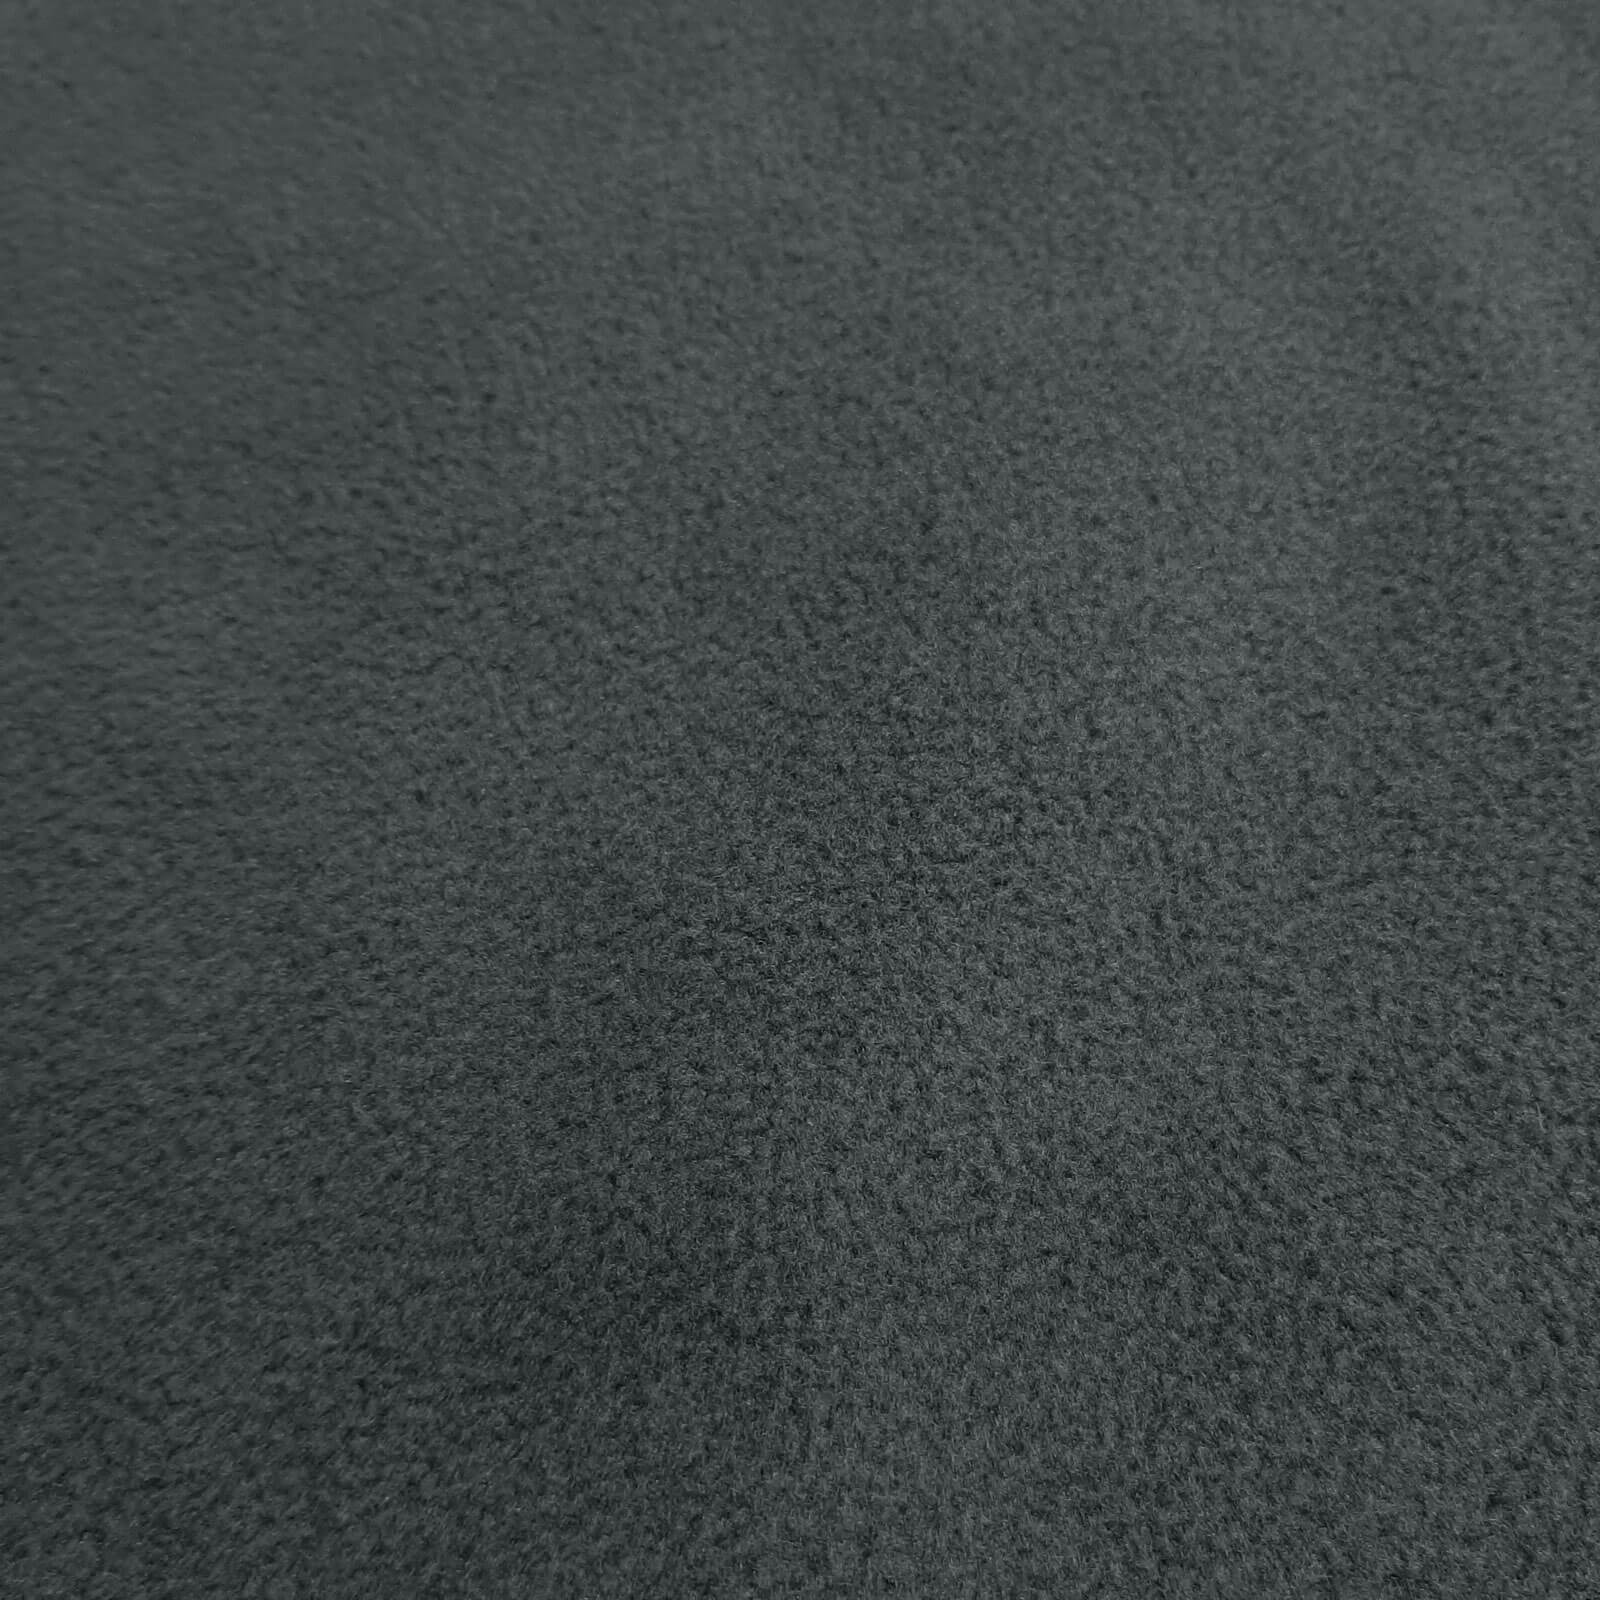 Imera - 300 Polartec® Fleece - Dark Grey